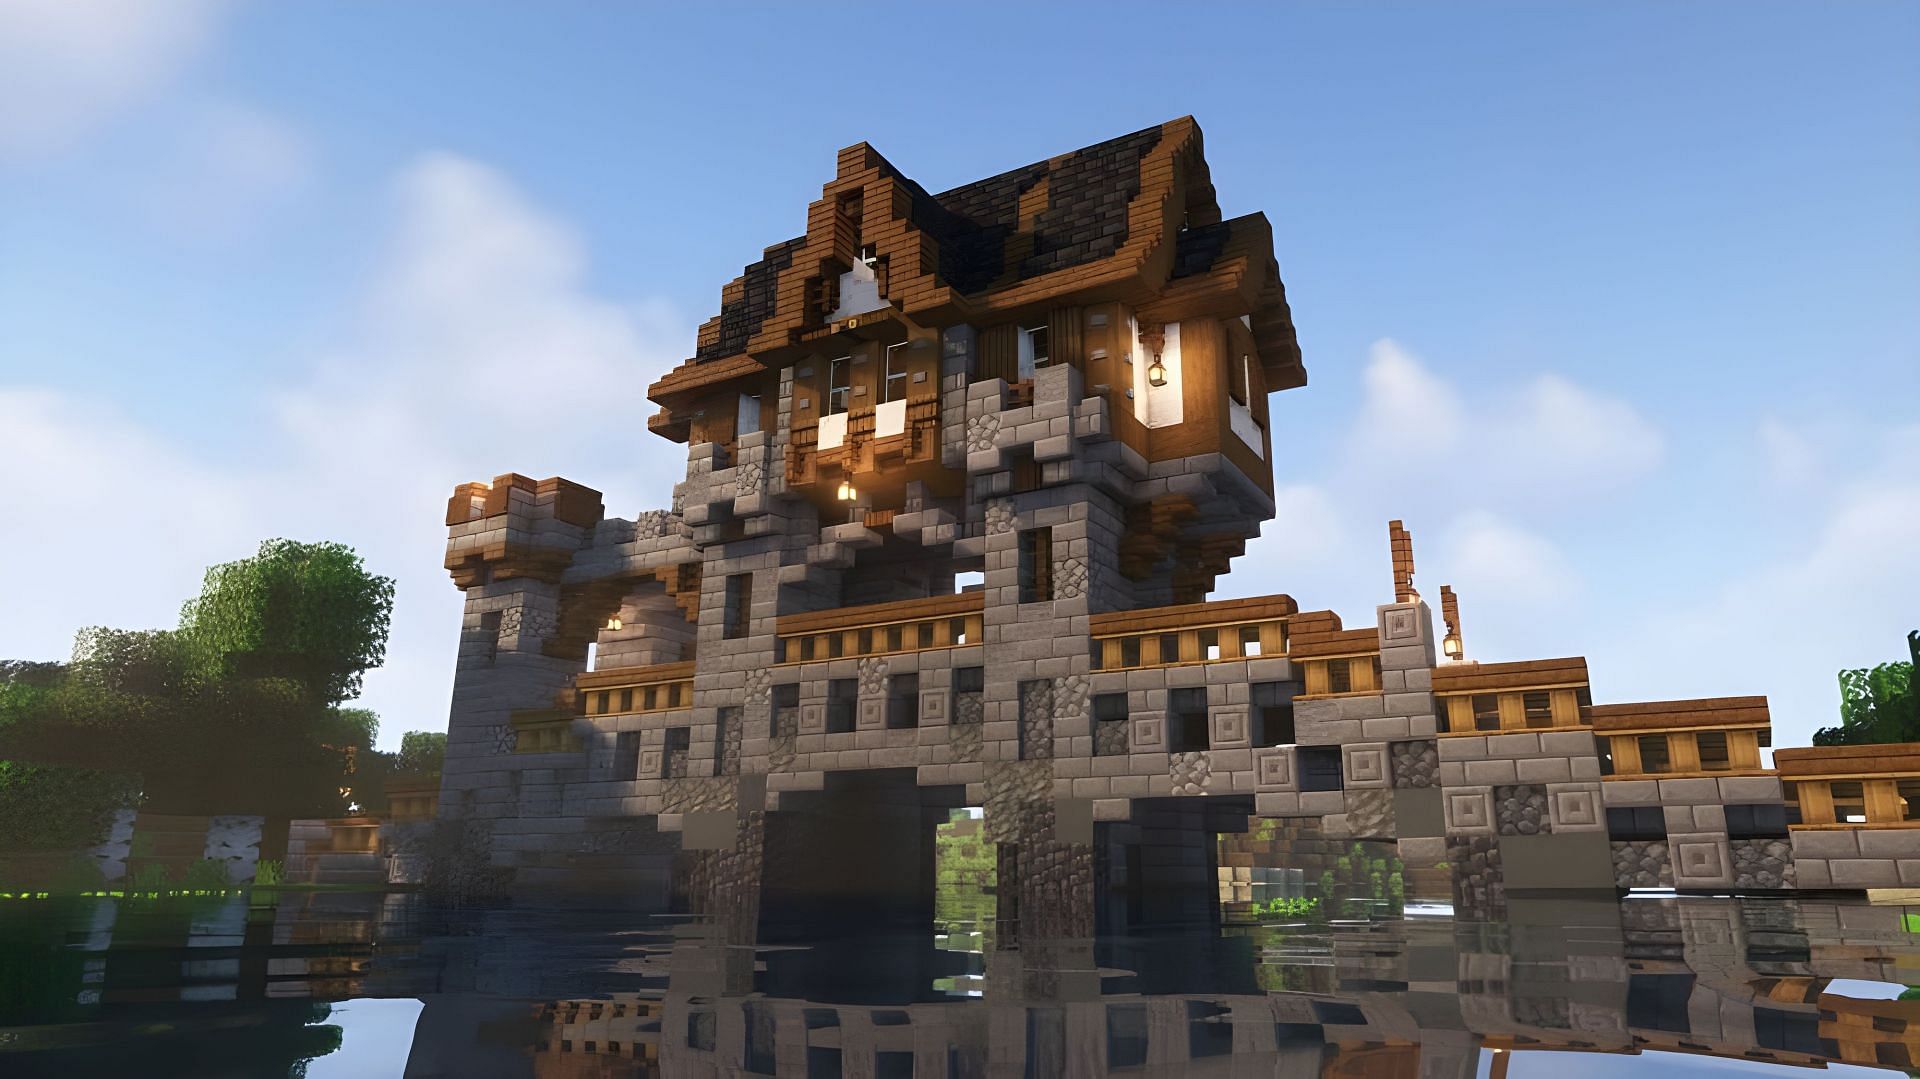 The Medieval Bridge House (Image via Youtube/MadenPlay)